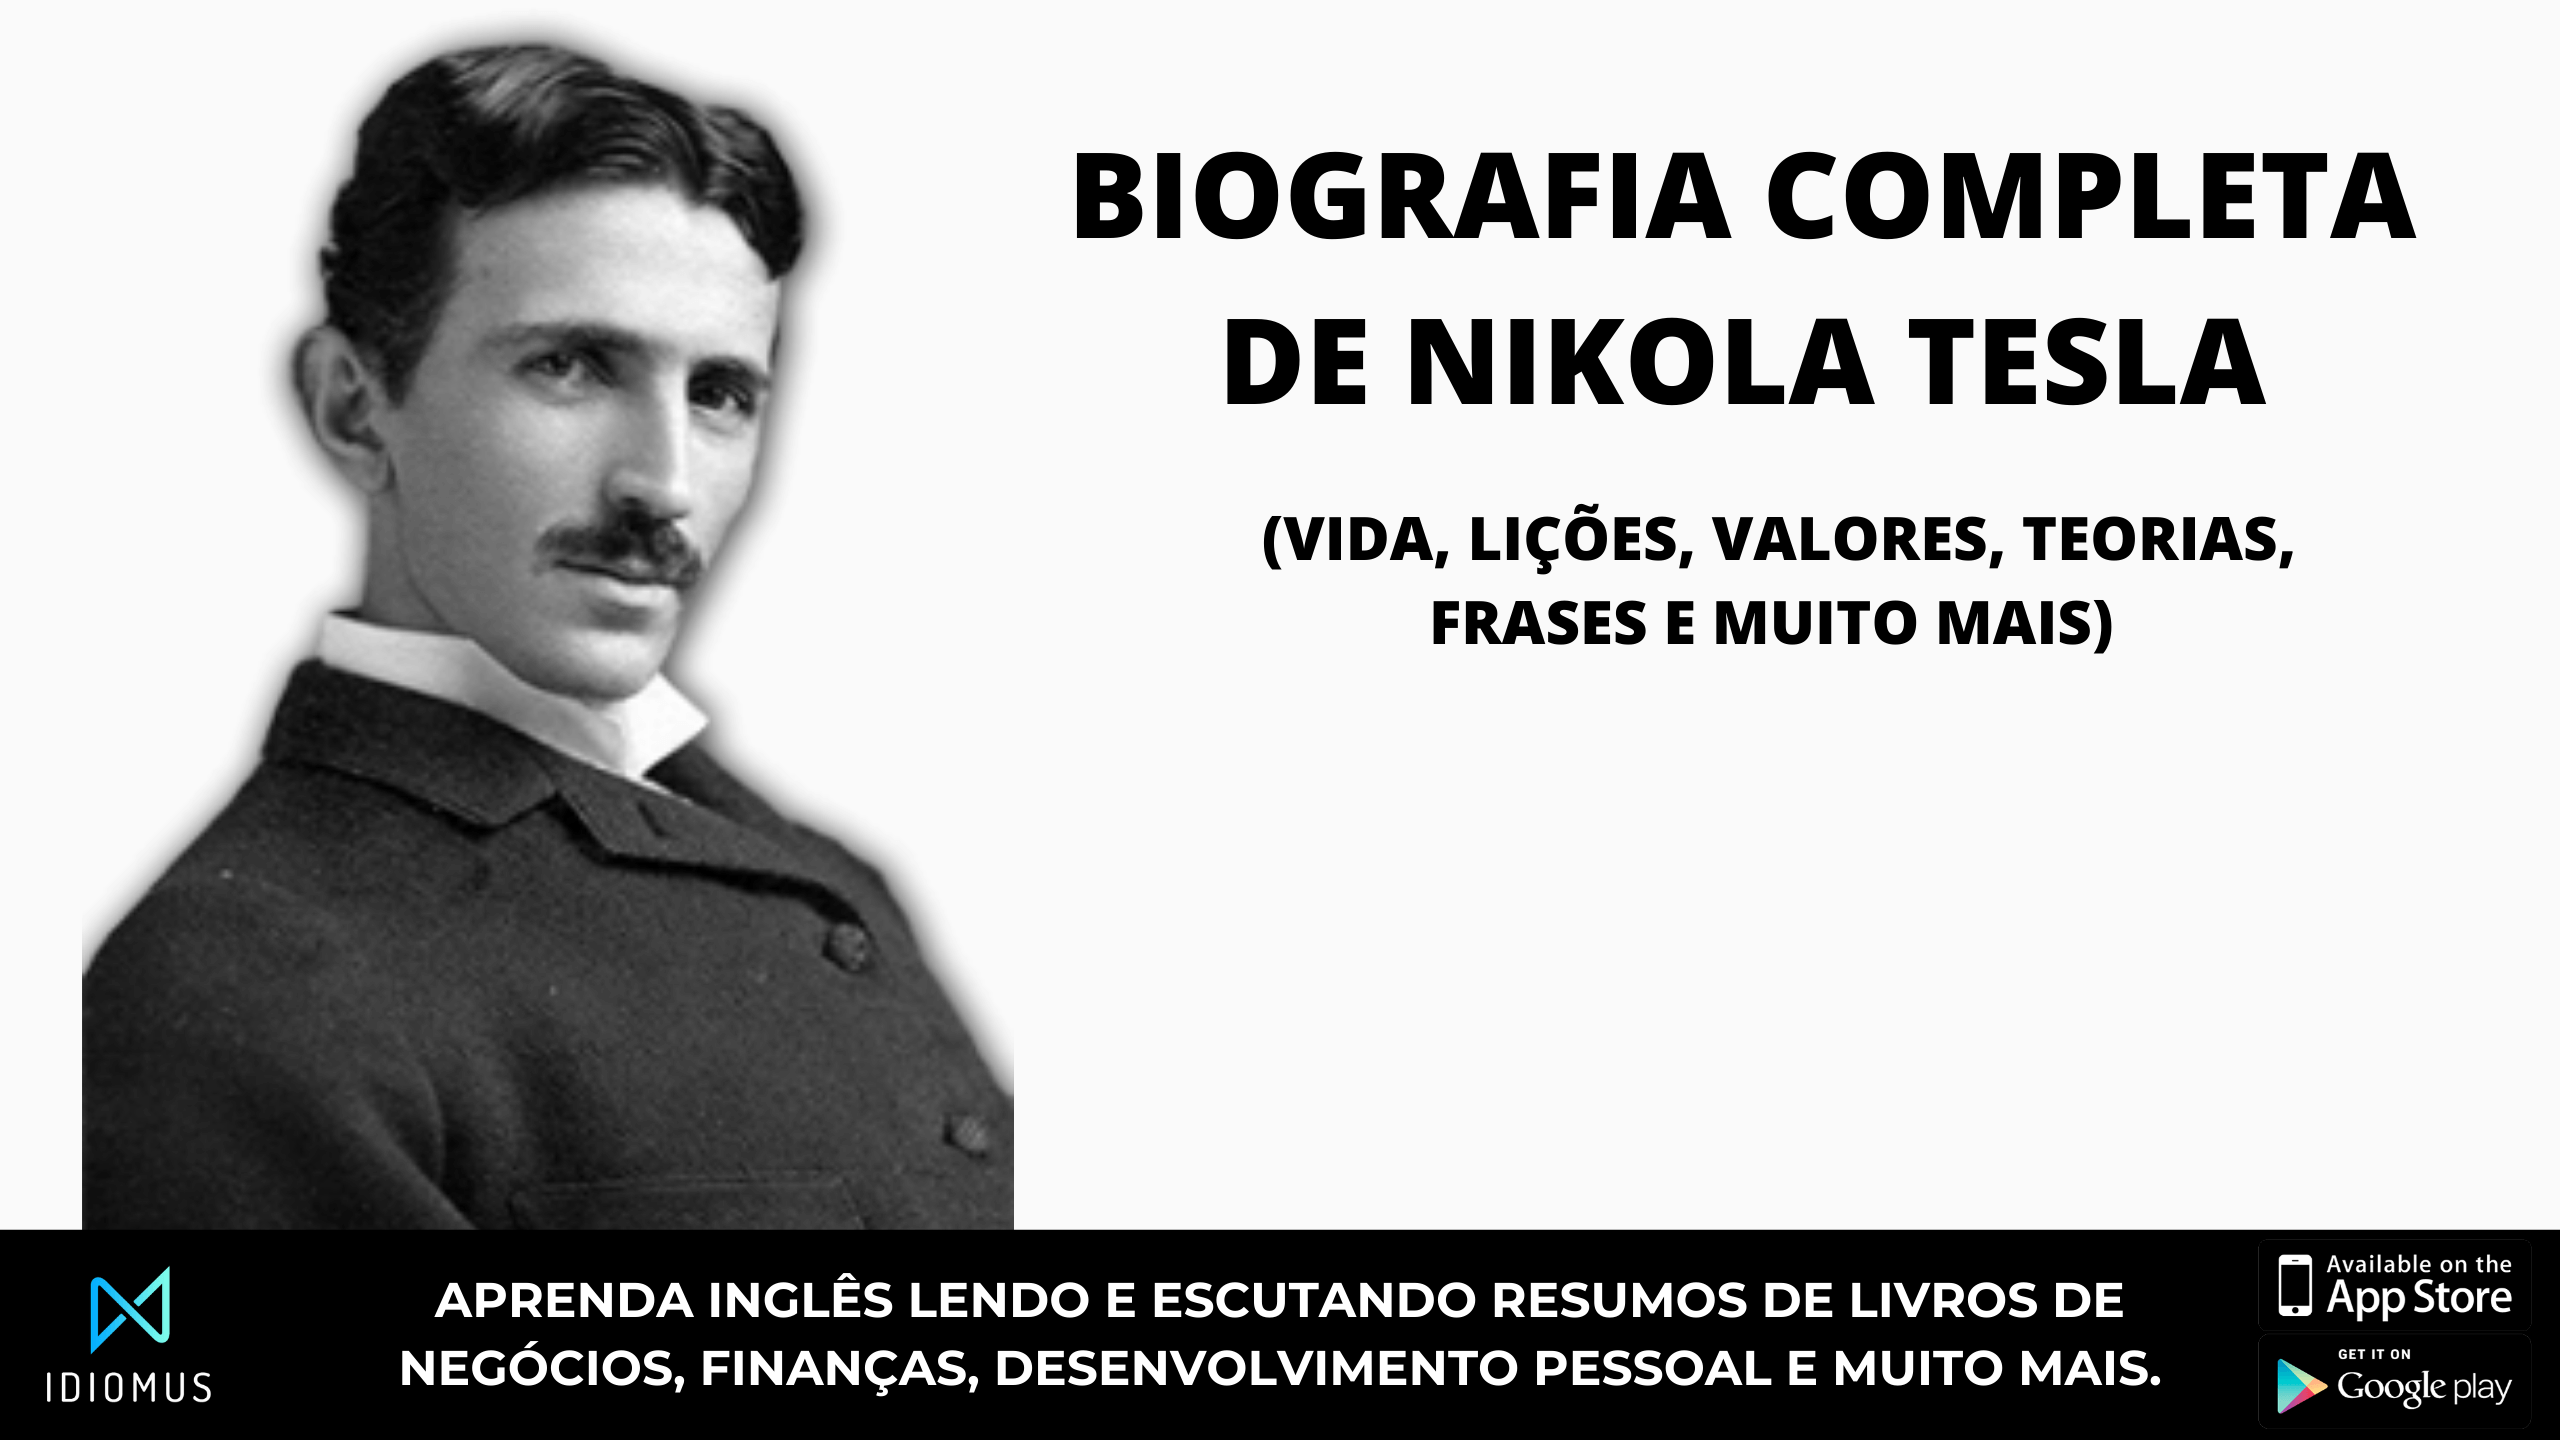 Biografia Nikola tesla (frases, ensinamentos, invenções)